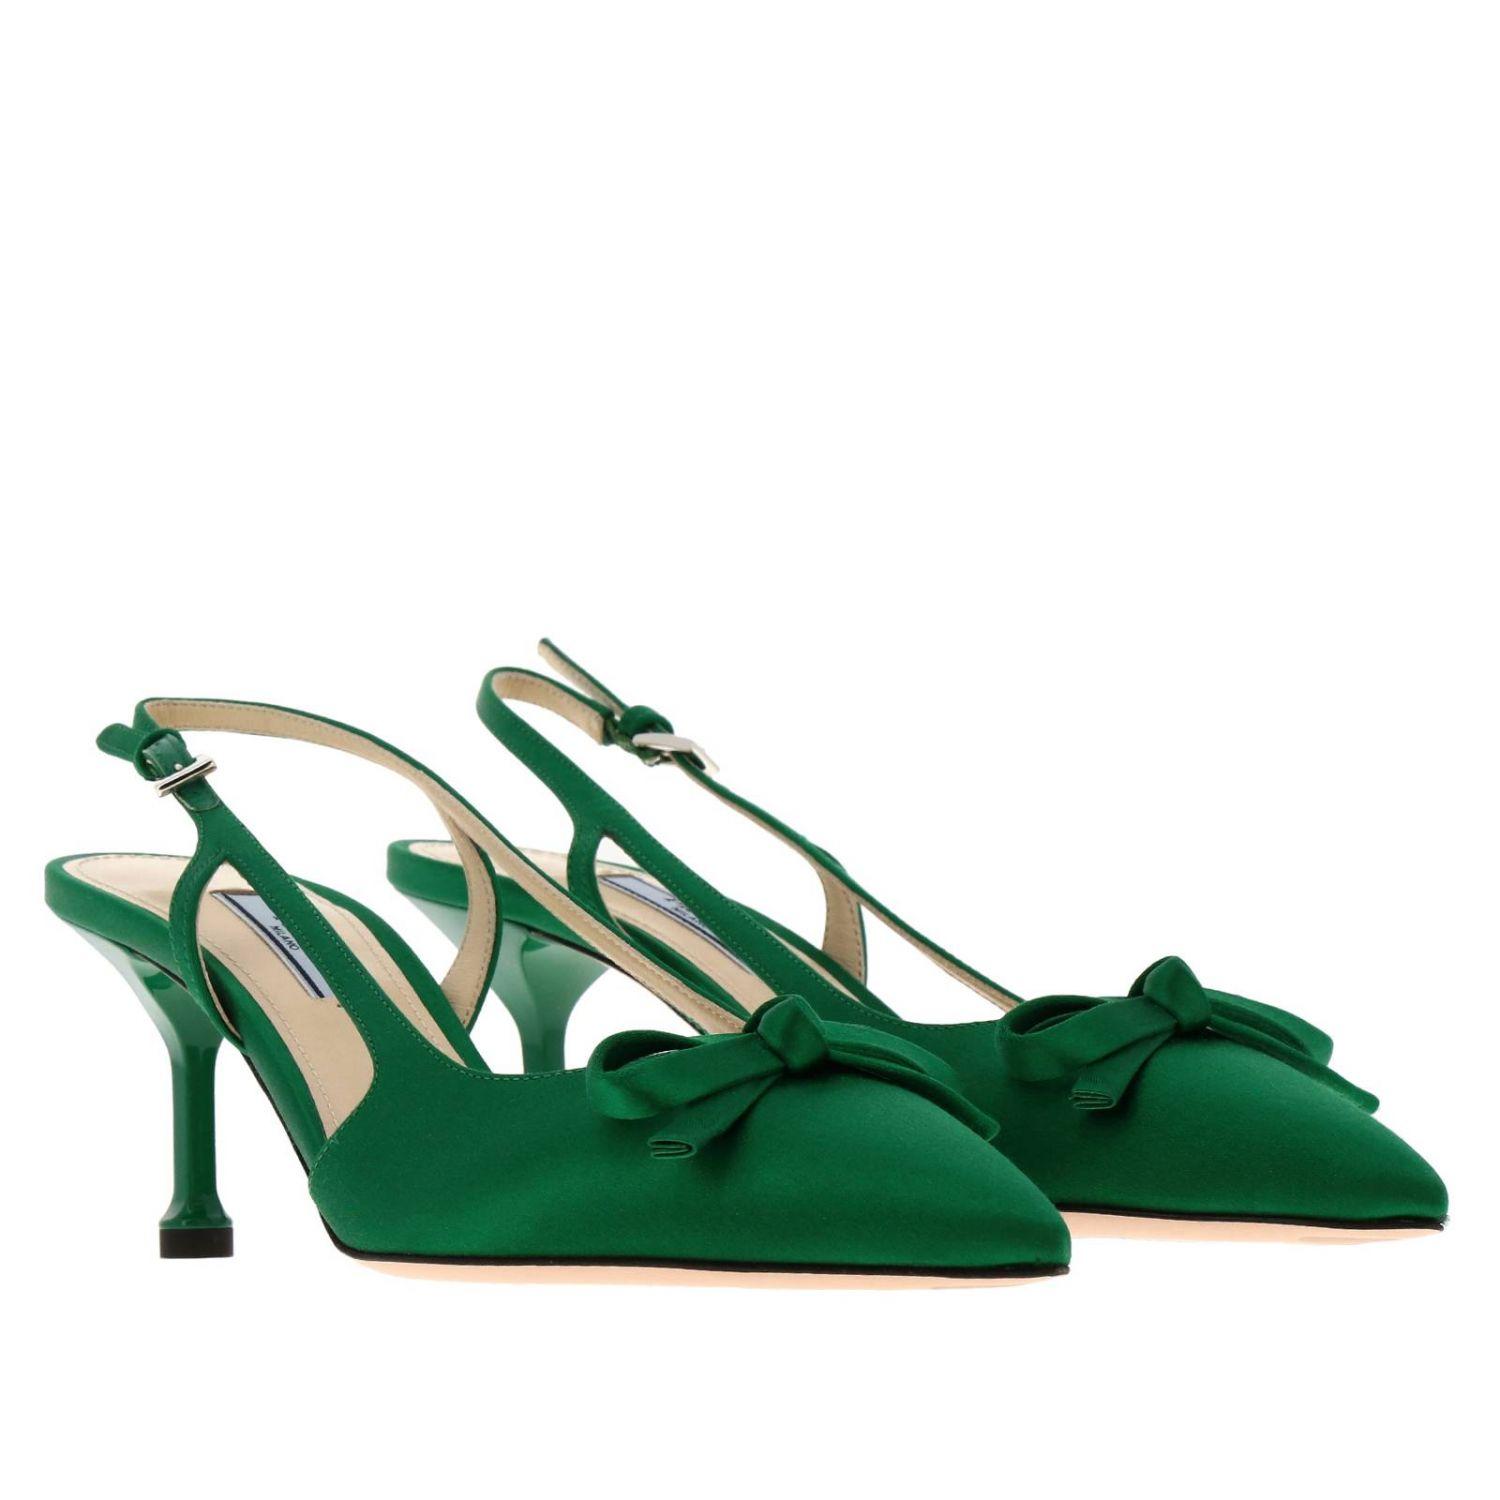 Prada High Heel Shoes Shoes Women in Green - Lyst